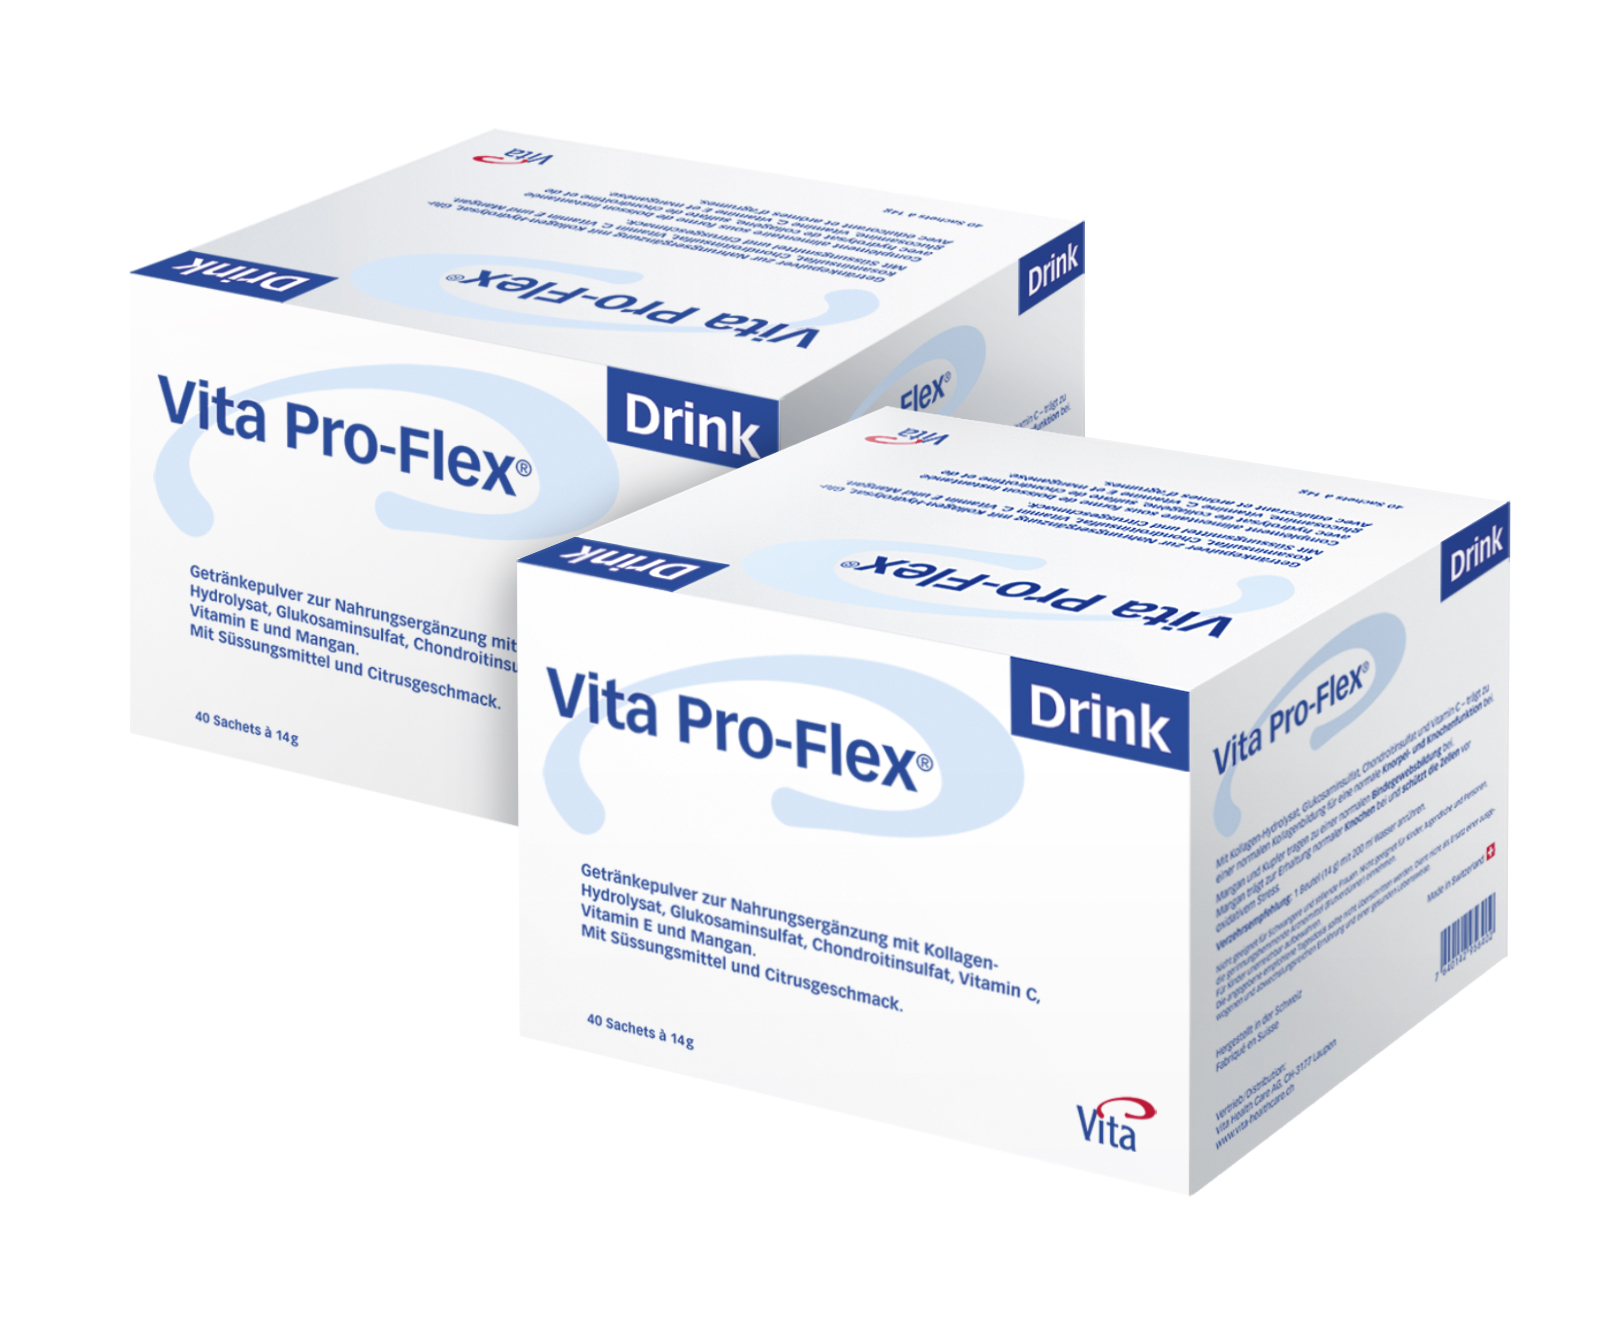 Vita Pro-Flex®& Double pack